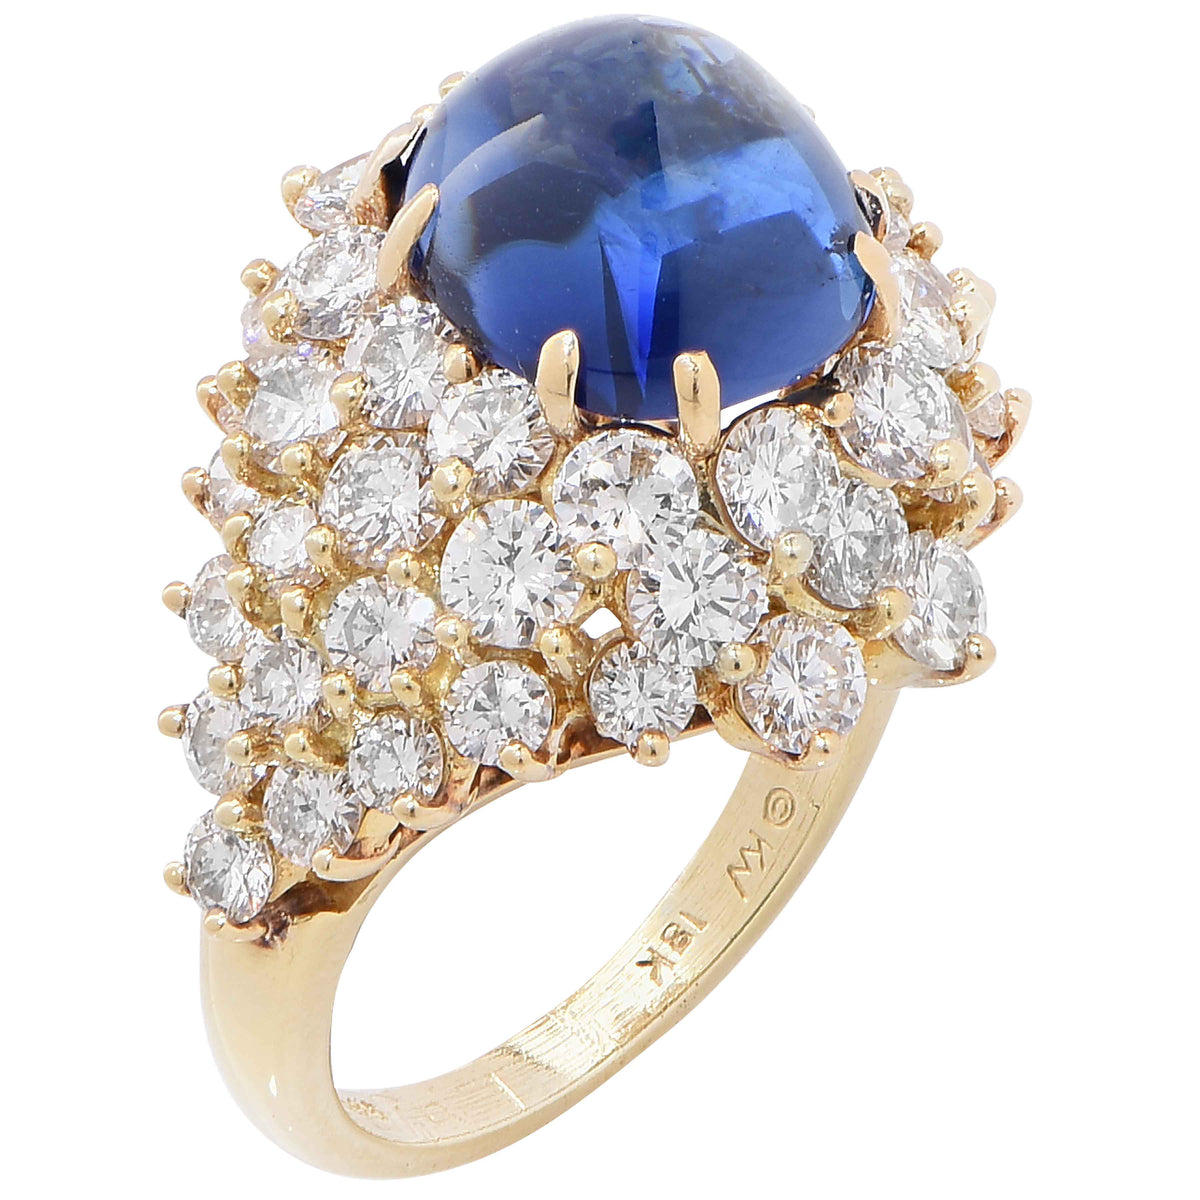 Kurt Wayne 9.8 Carat Natural Cabochon Sapphire Diamond Gold Ring